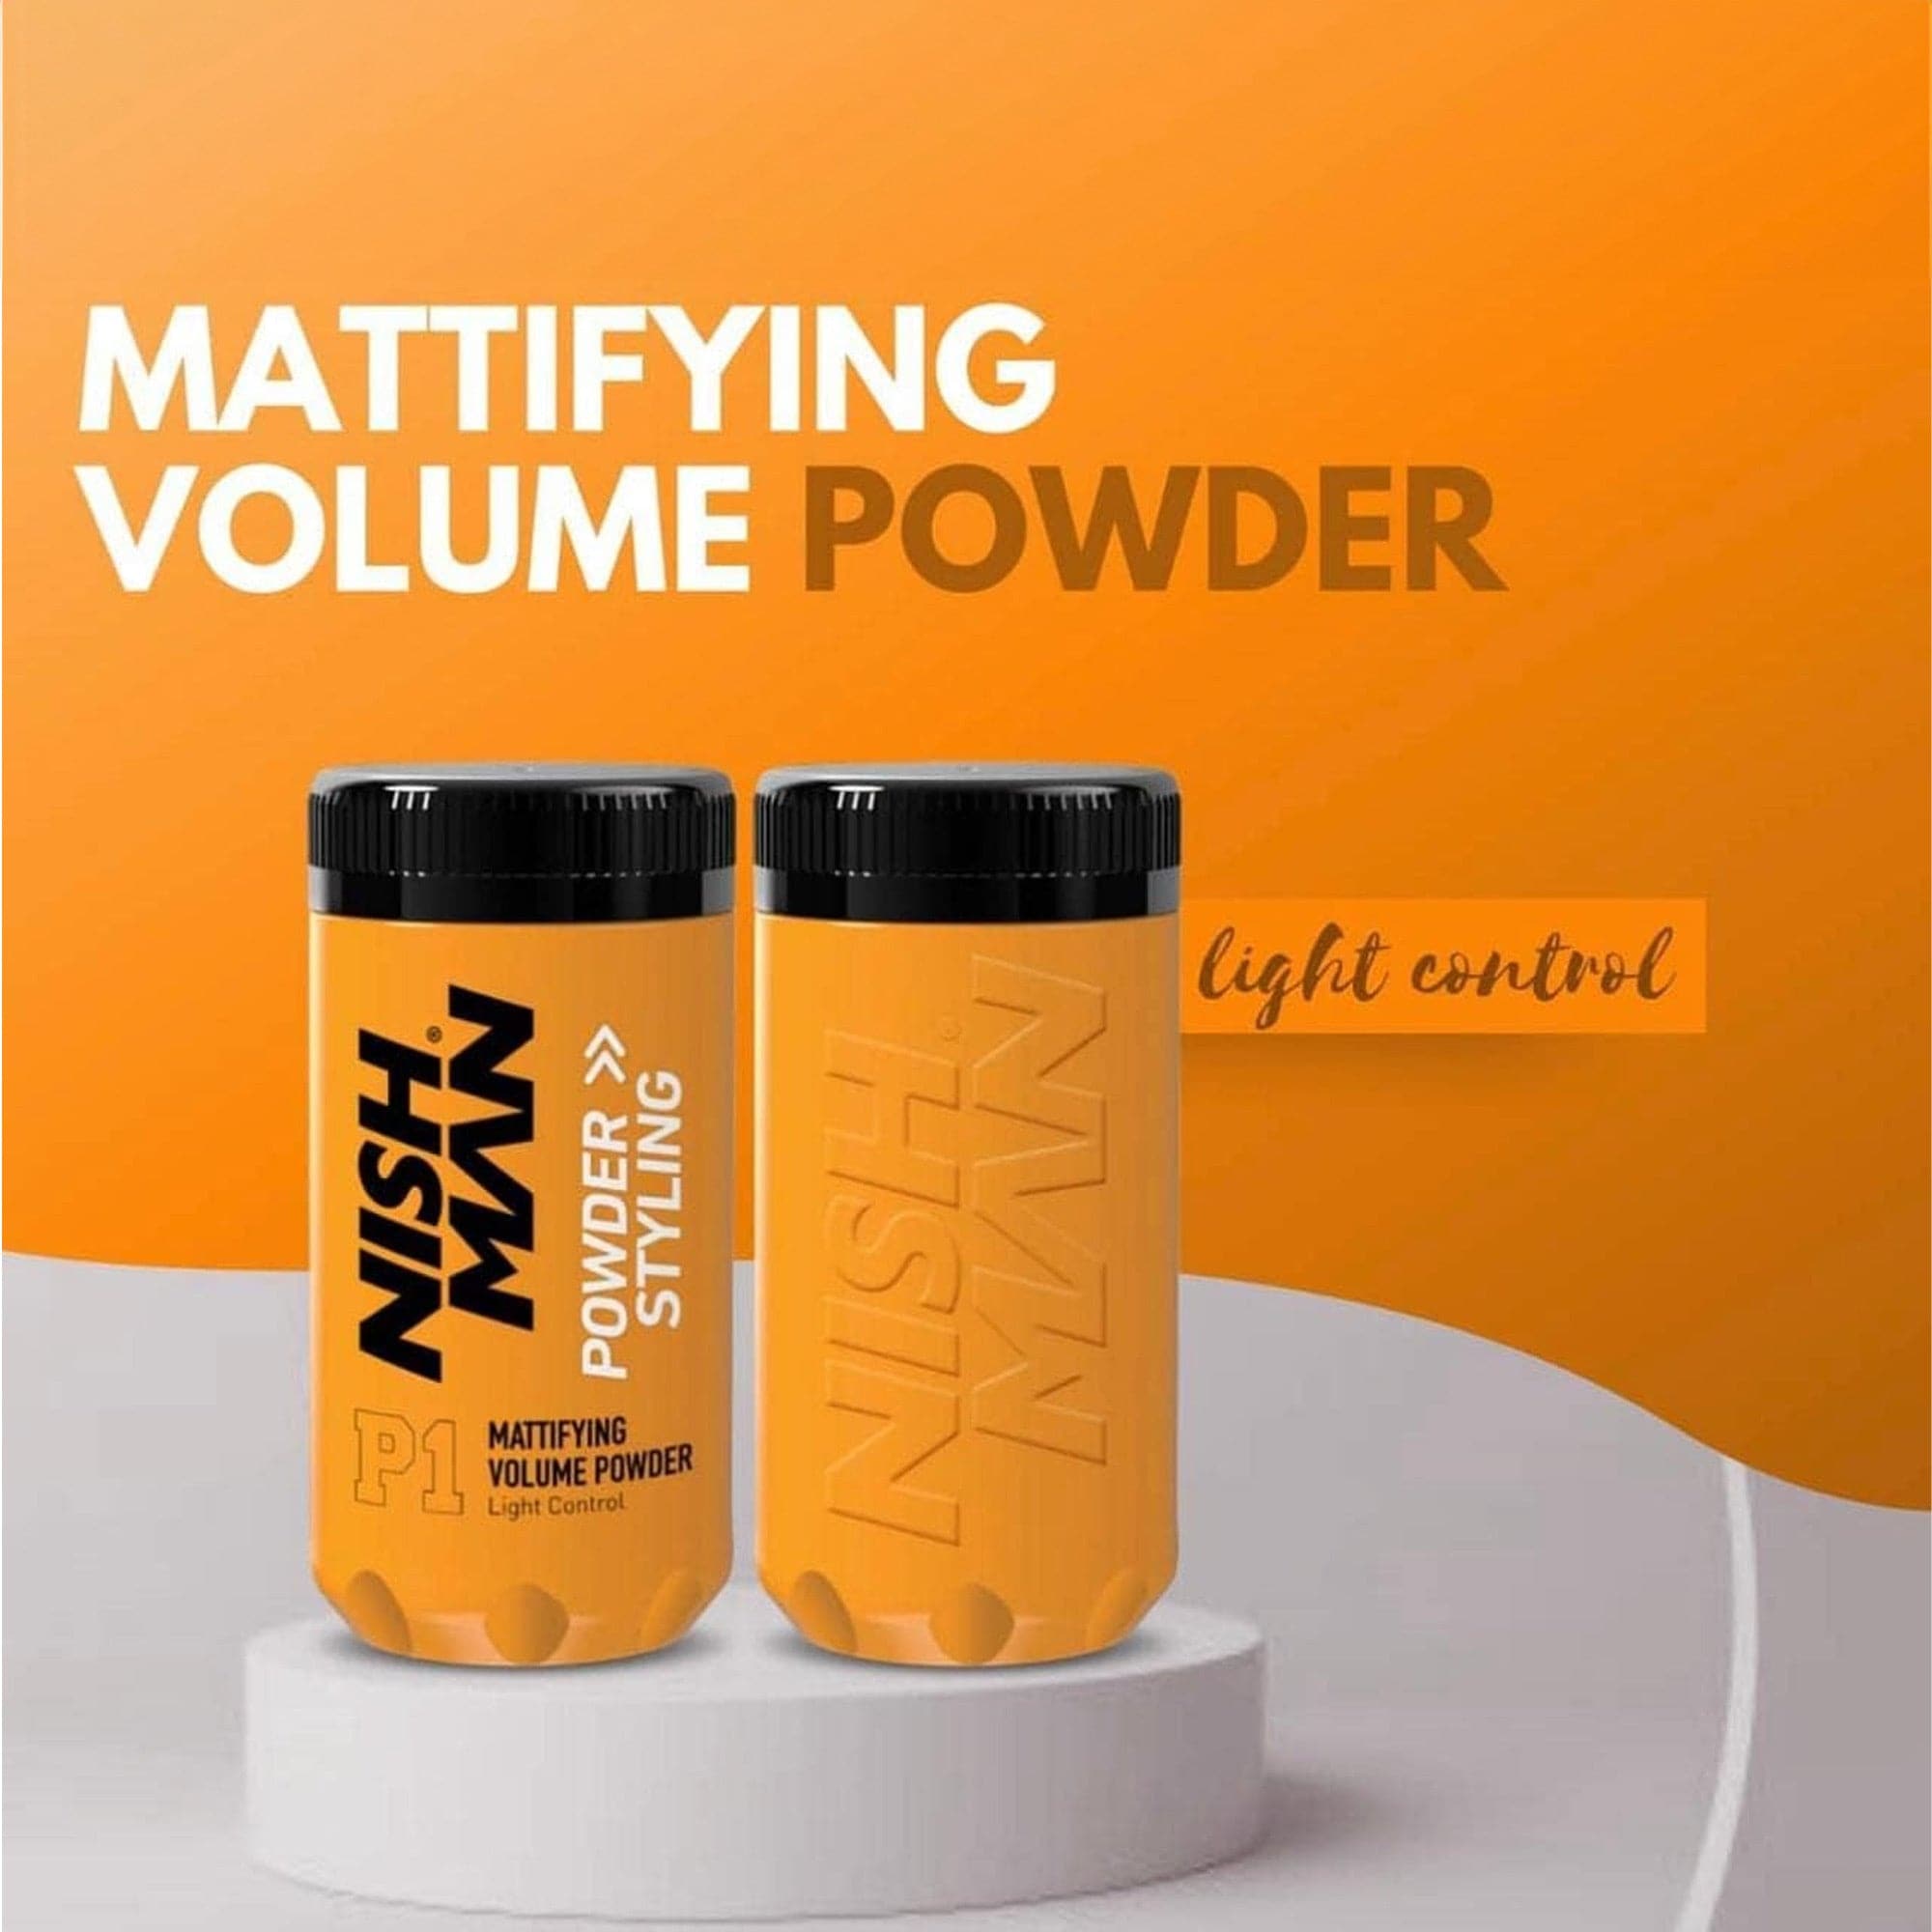 Nishman - Hair Styling Powder Wax P1 Mattifying Volume Light Control 20g